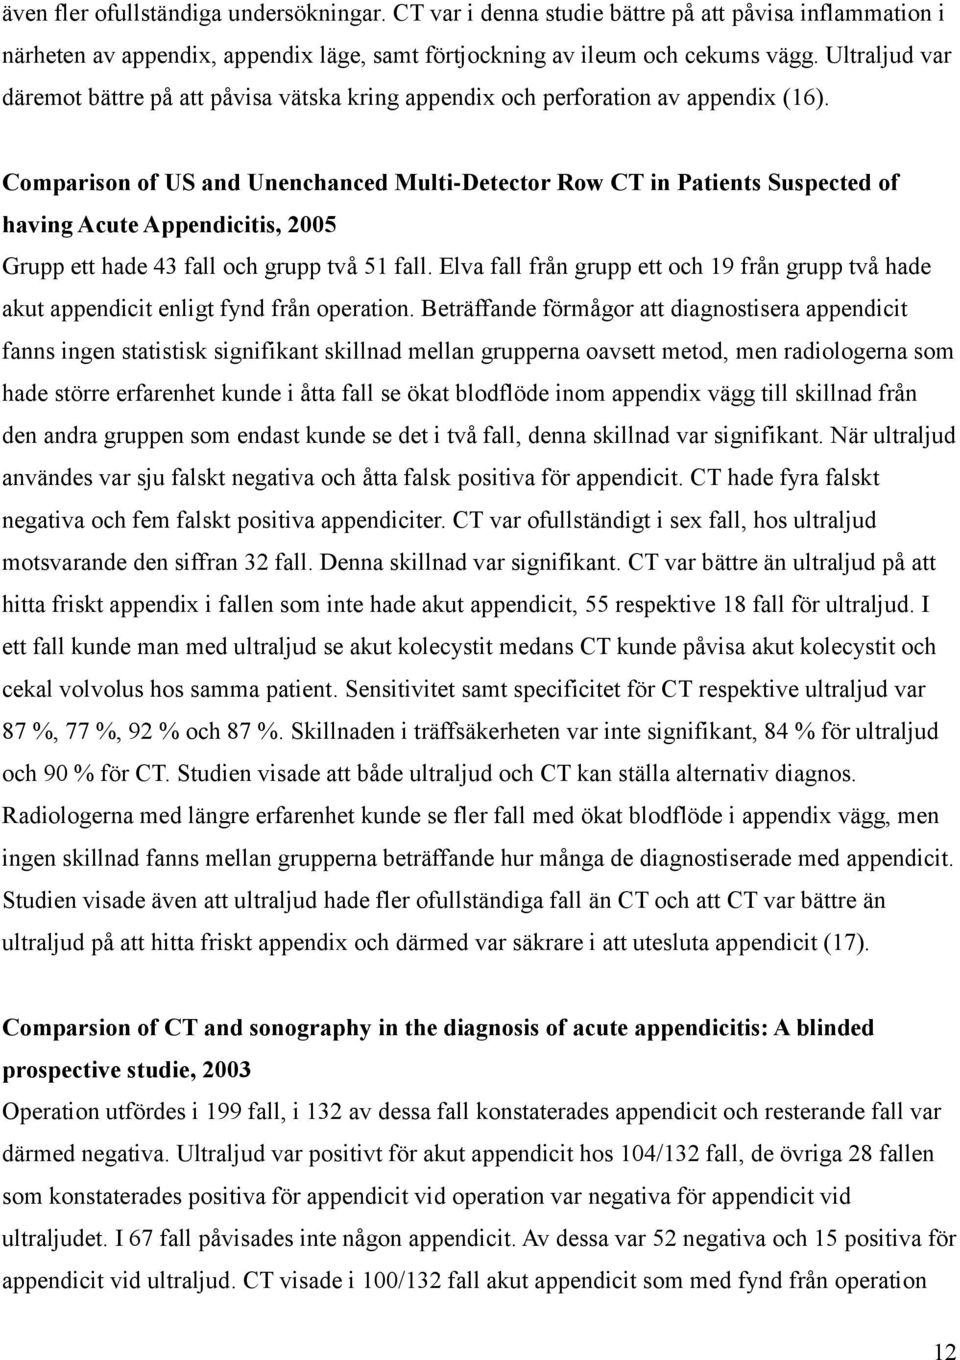 Comparison of US and Unenchanced Multi-Detector Row CT in Patients Suspected of having Acute Appendicitis, 2005 Grupp ett hade 43 fall och grupp två 51 fall.